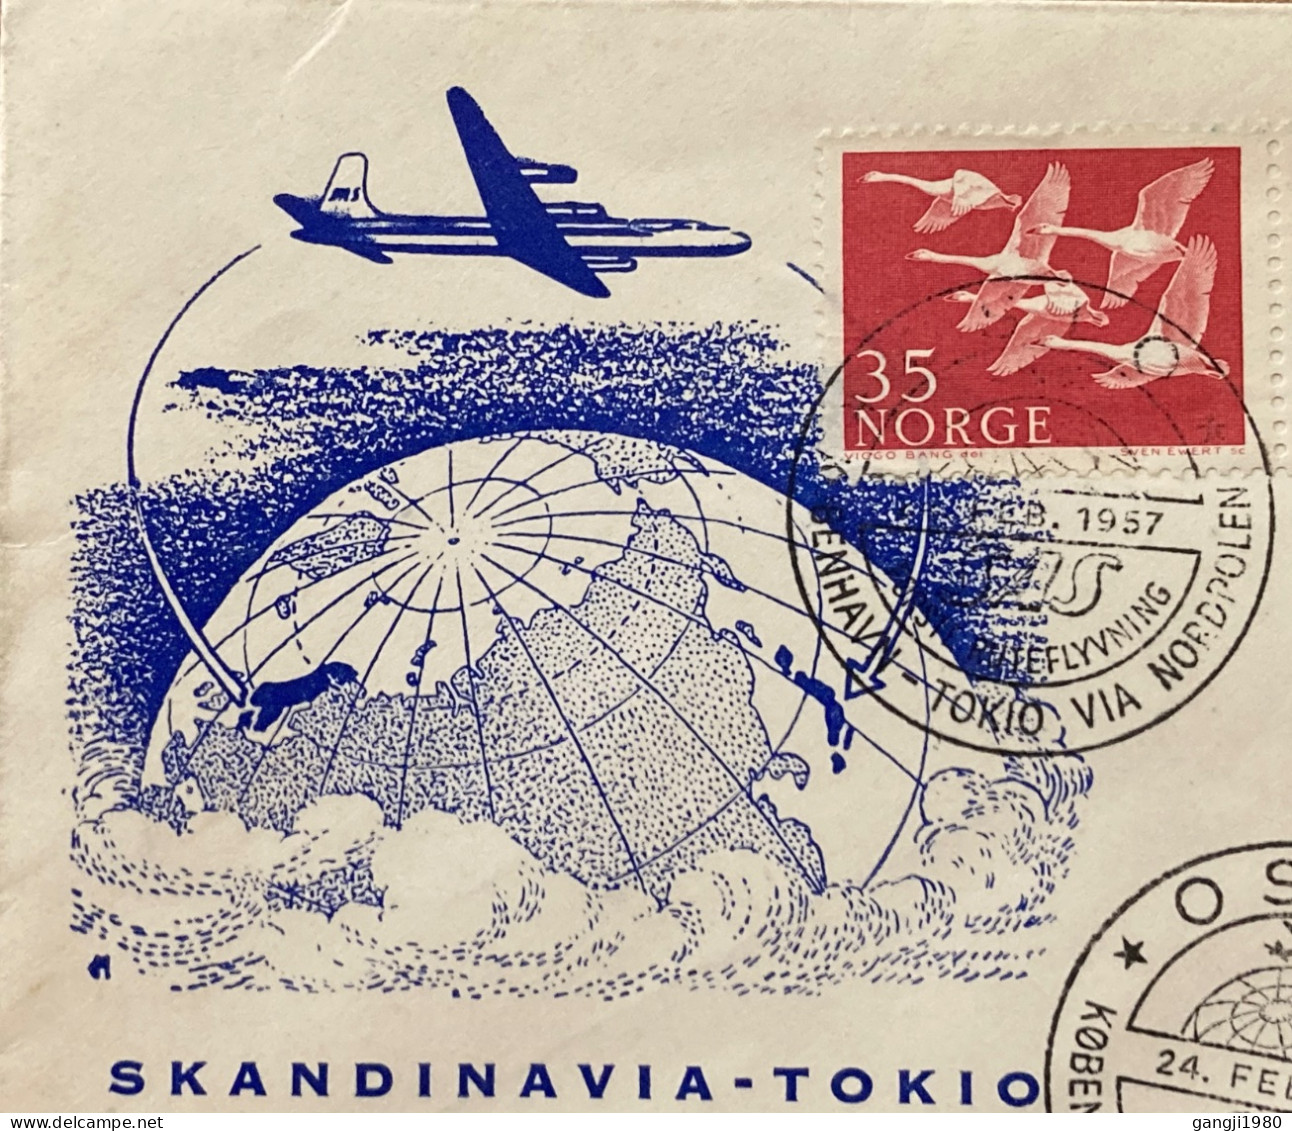 NORWAY 1957, FIRST FLIGHT COVER TO JAPAN, KOPEHAVEN -TO KYO VIA NORDPOLEN OSLO, TOKYO CITY CANCEL, ILLUSTRATE PLANE ON G - Cartas & Documentos